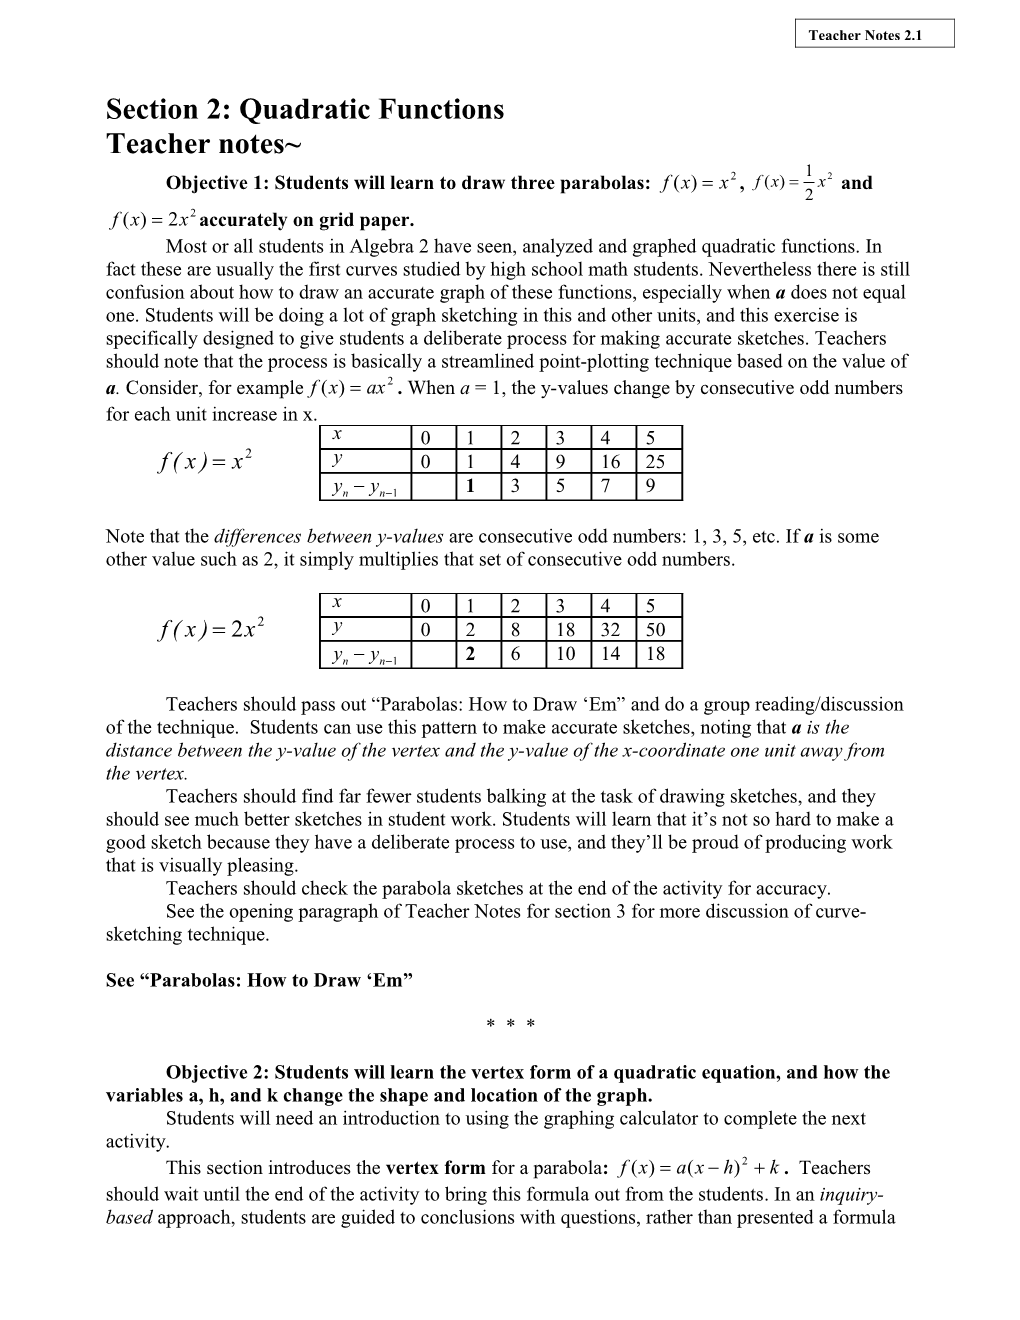 Section 2: Quadratic Functions